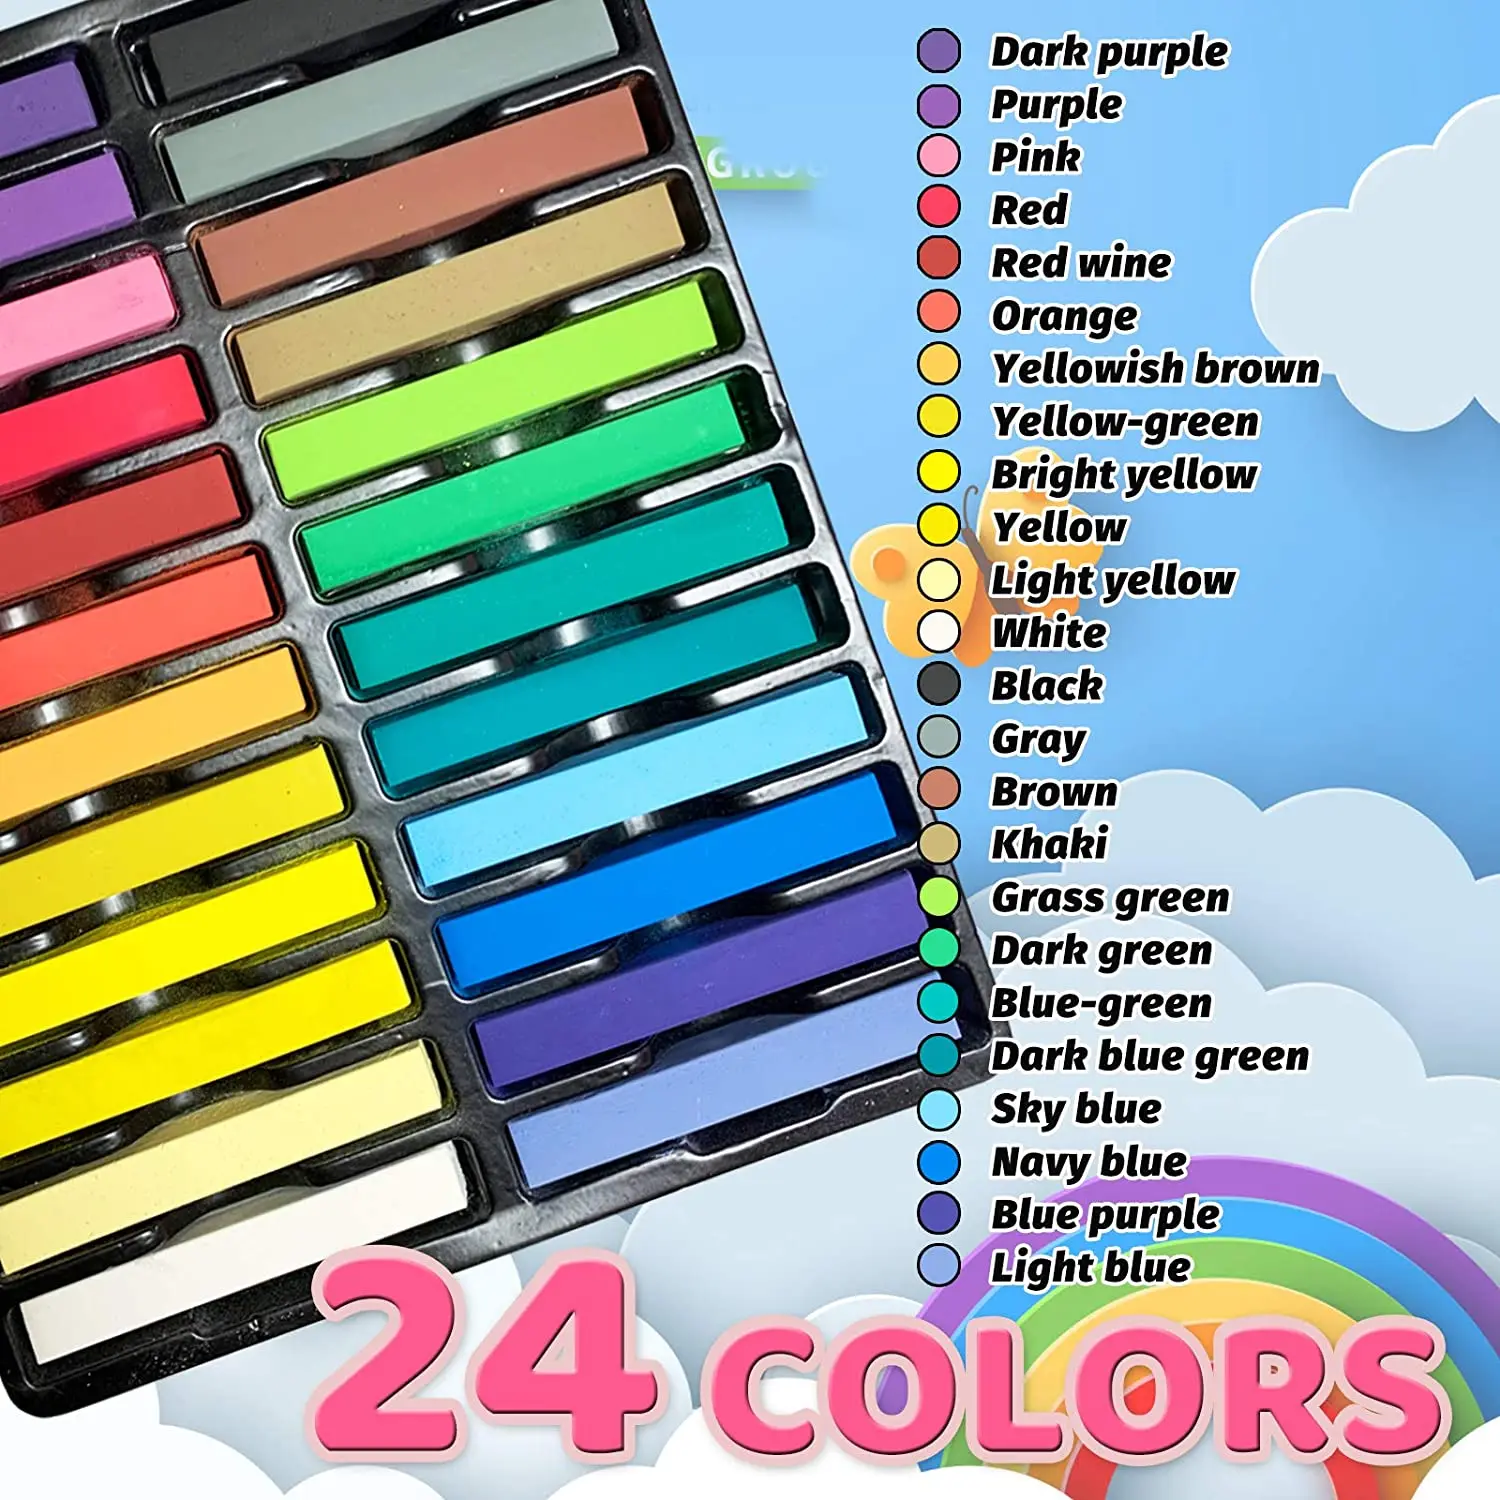 Hair Chalk Color Set for Girls Kids Christmas Birthday Gifts, 12